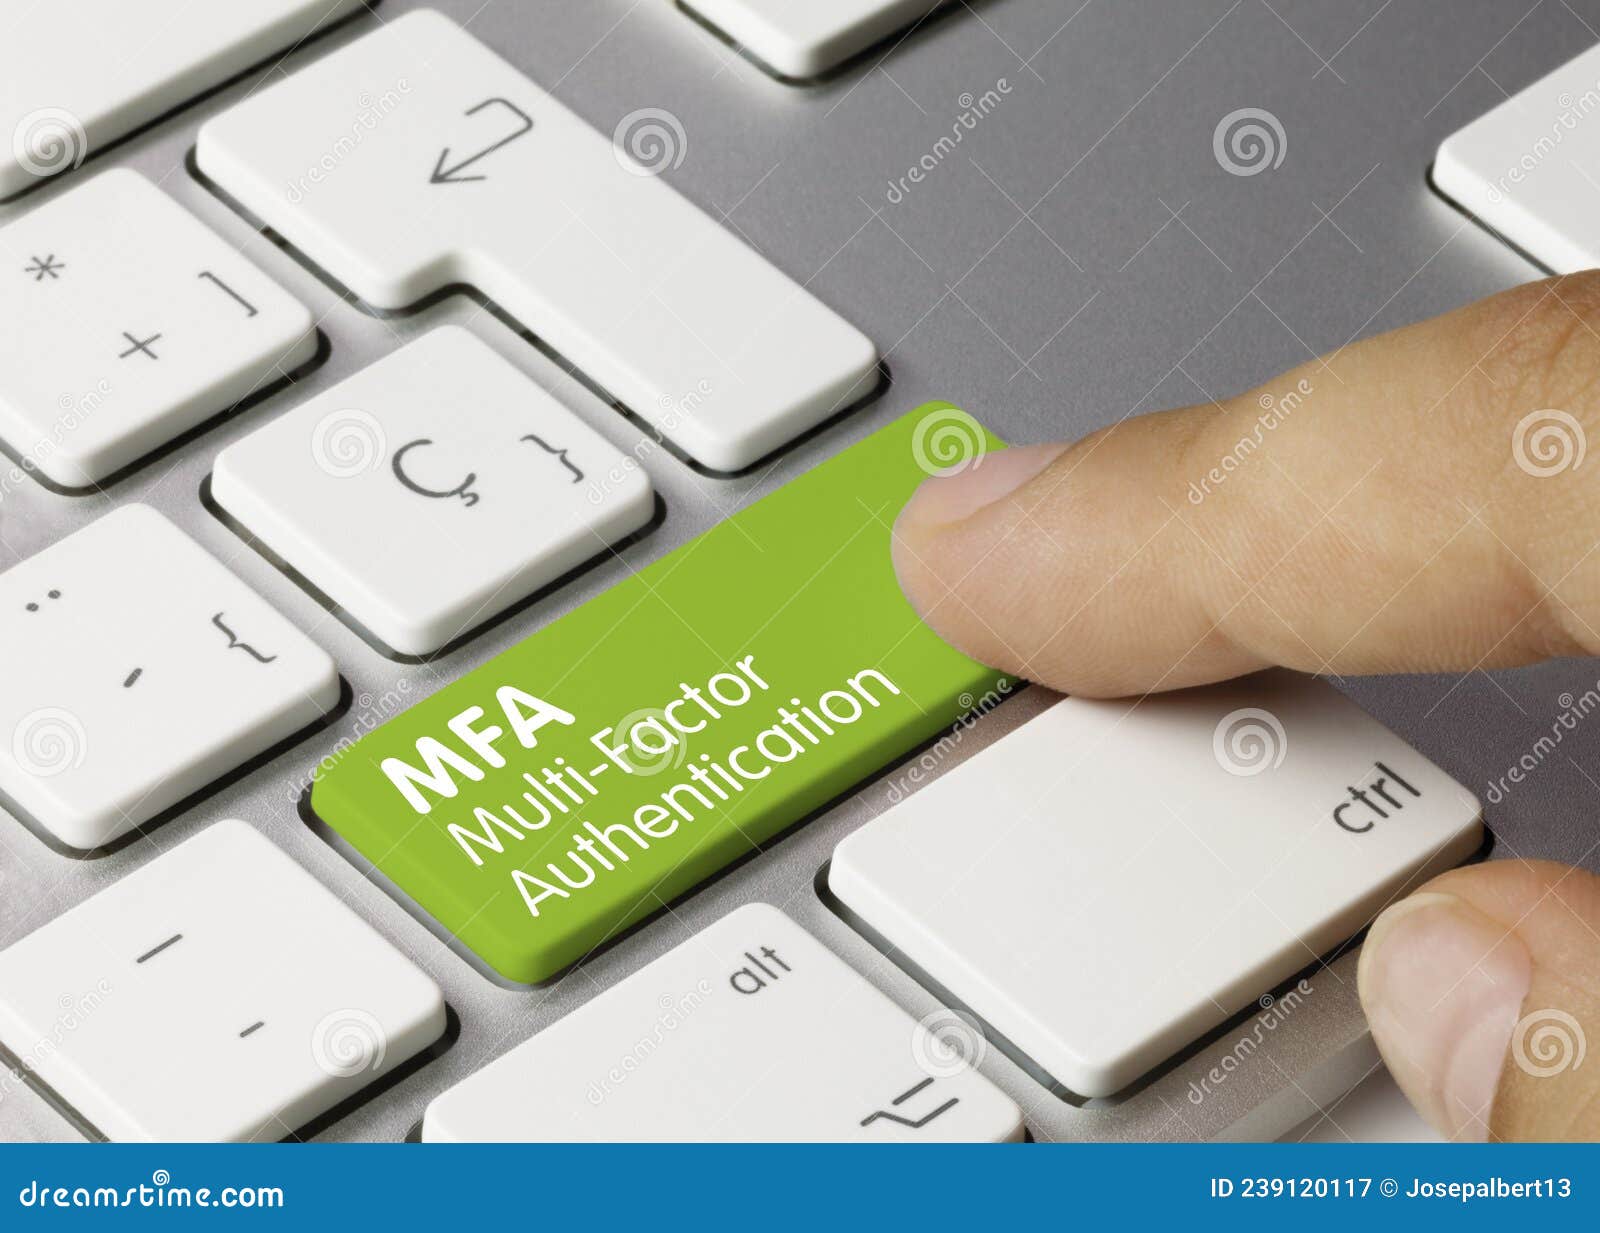 mfa multi-factor authentication - inscription on green keyboard key